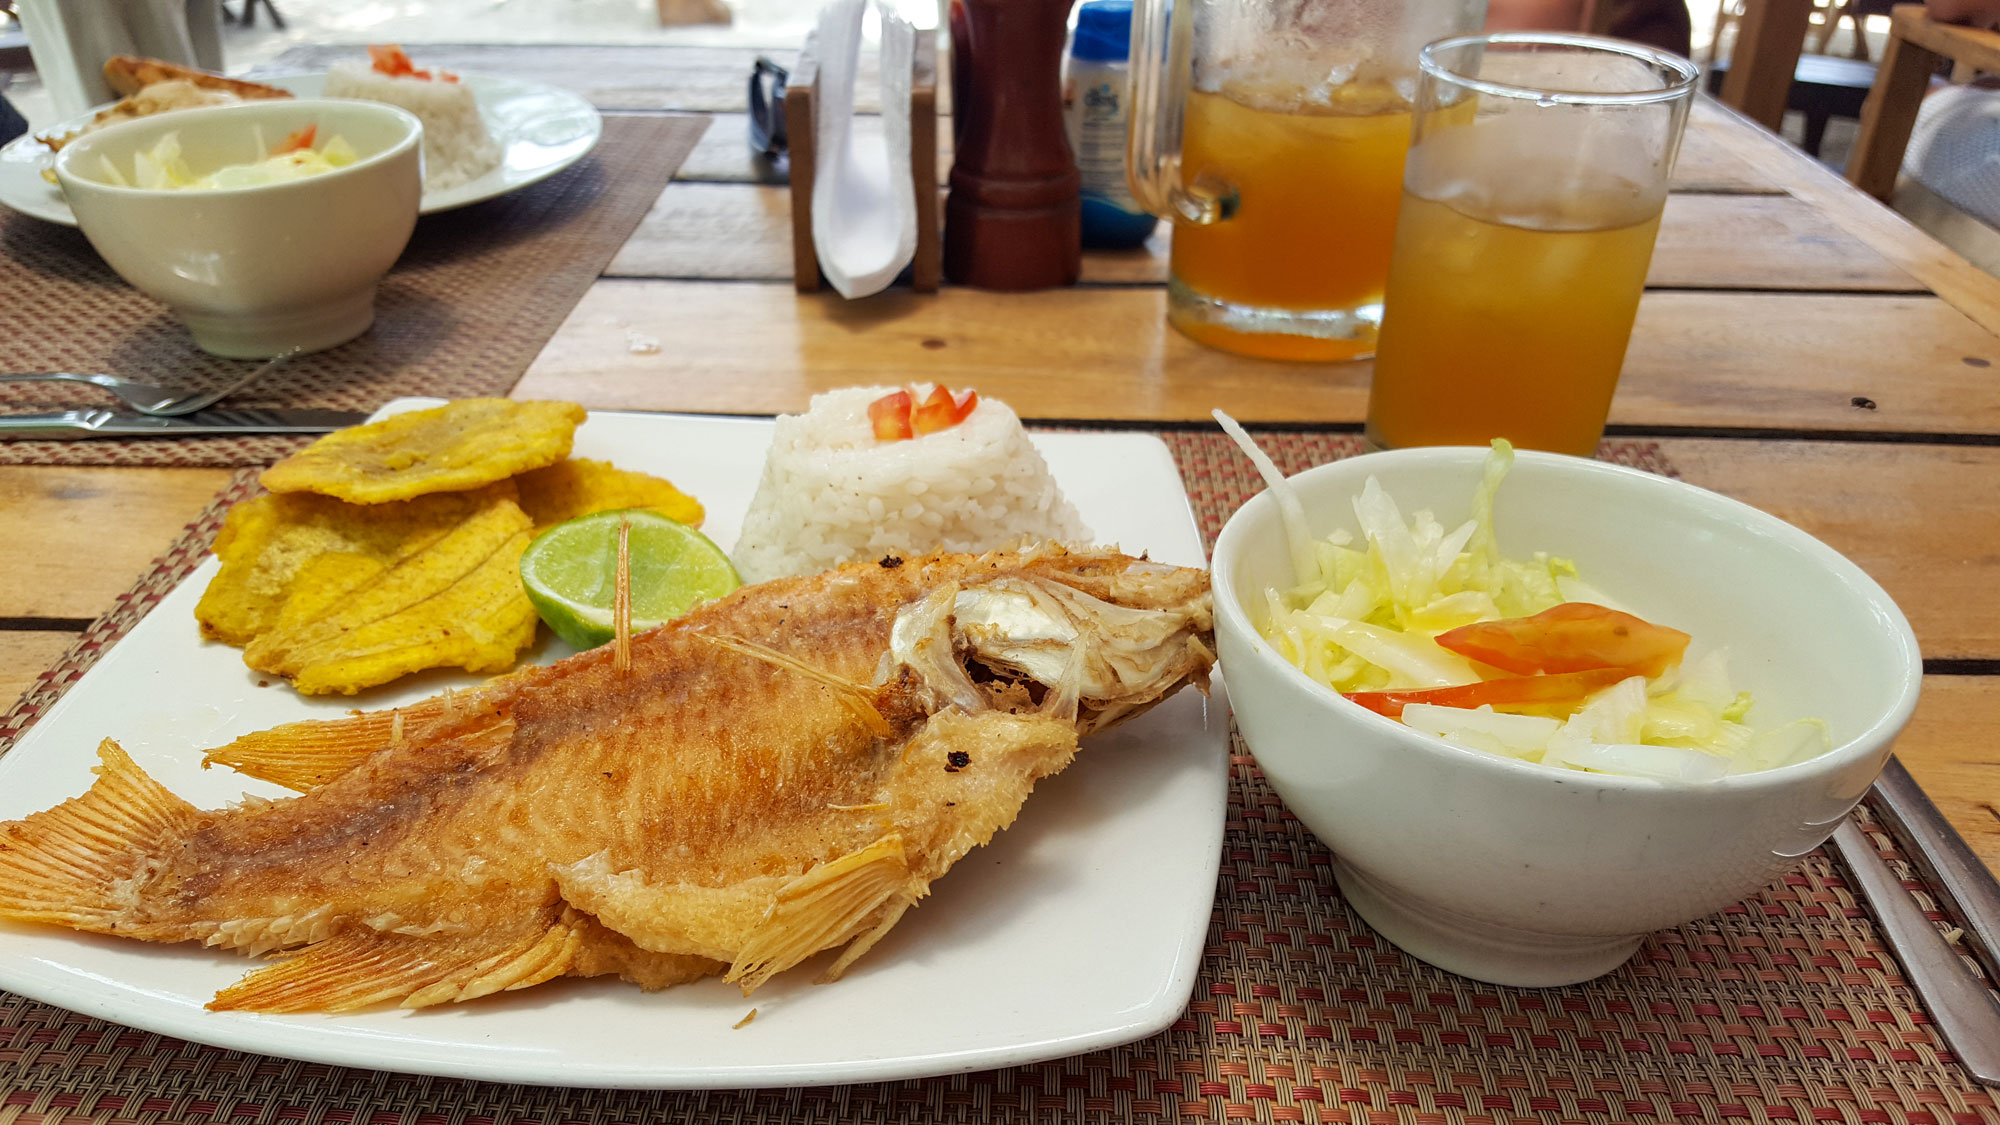 Krystal's meal: salad, fish, plantains, and aguapanela